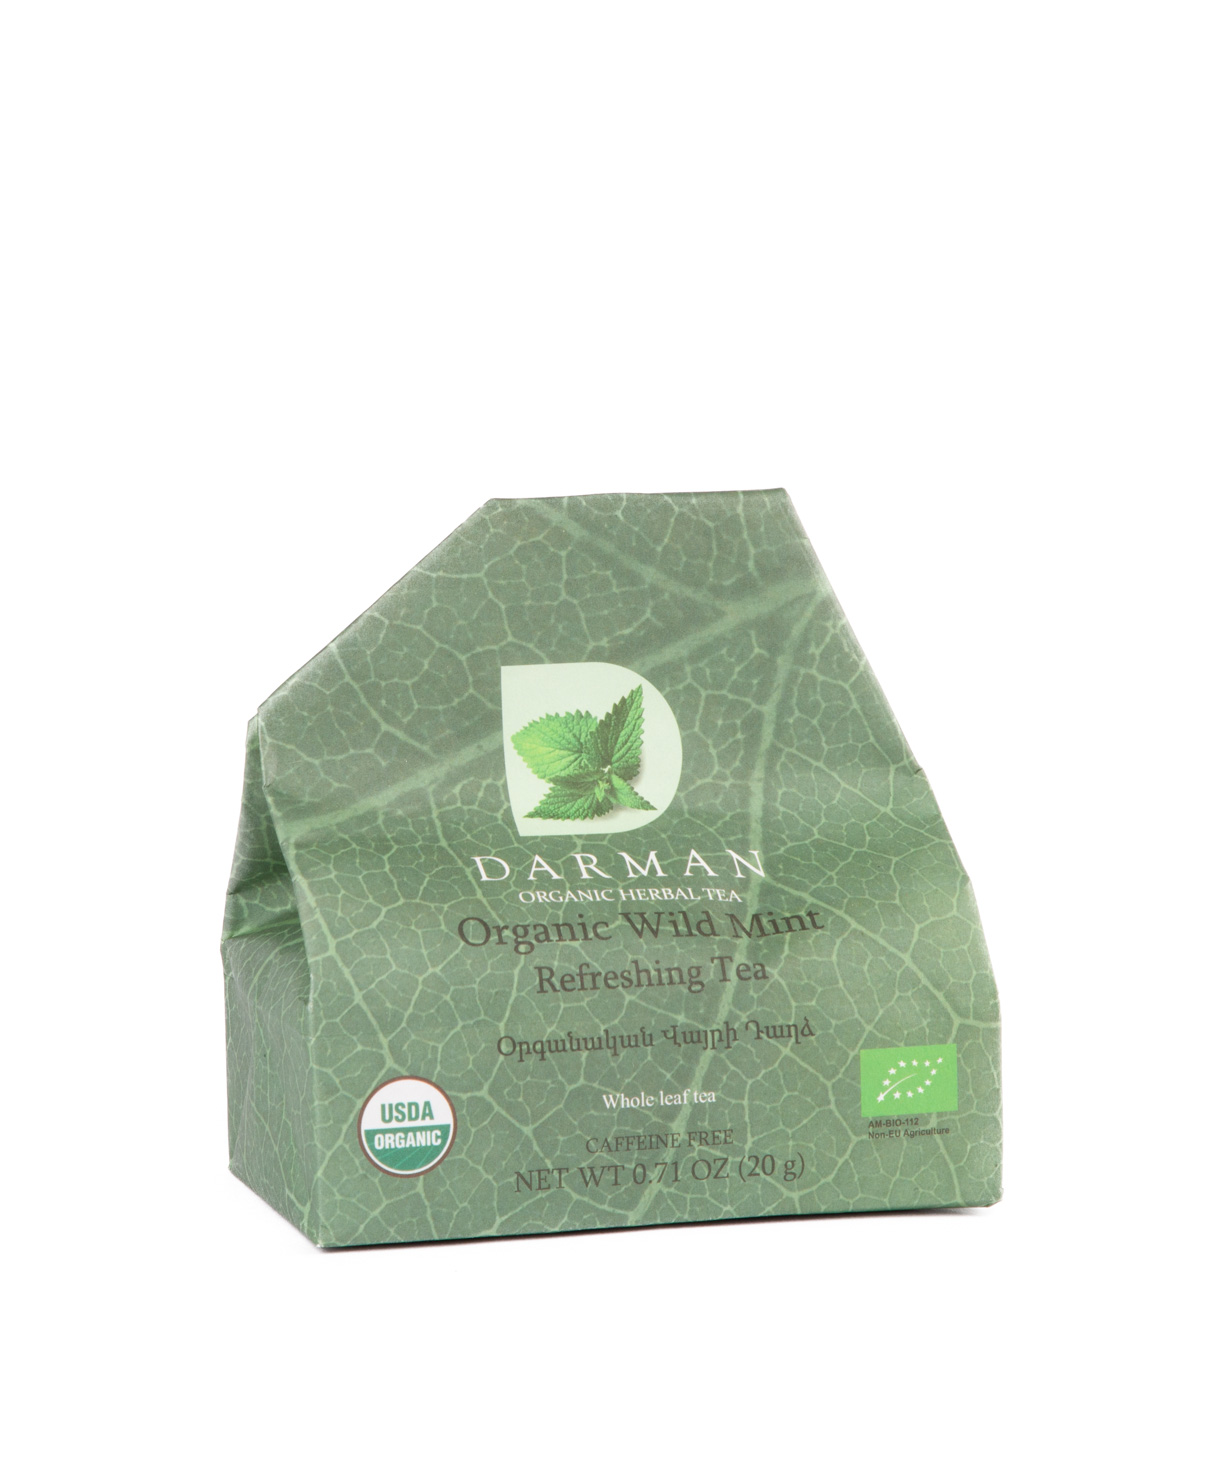 Թեյ «Darman organic herbal tea» օրգանիկ, դաղձով